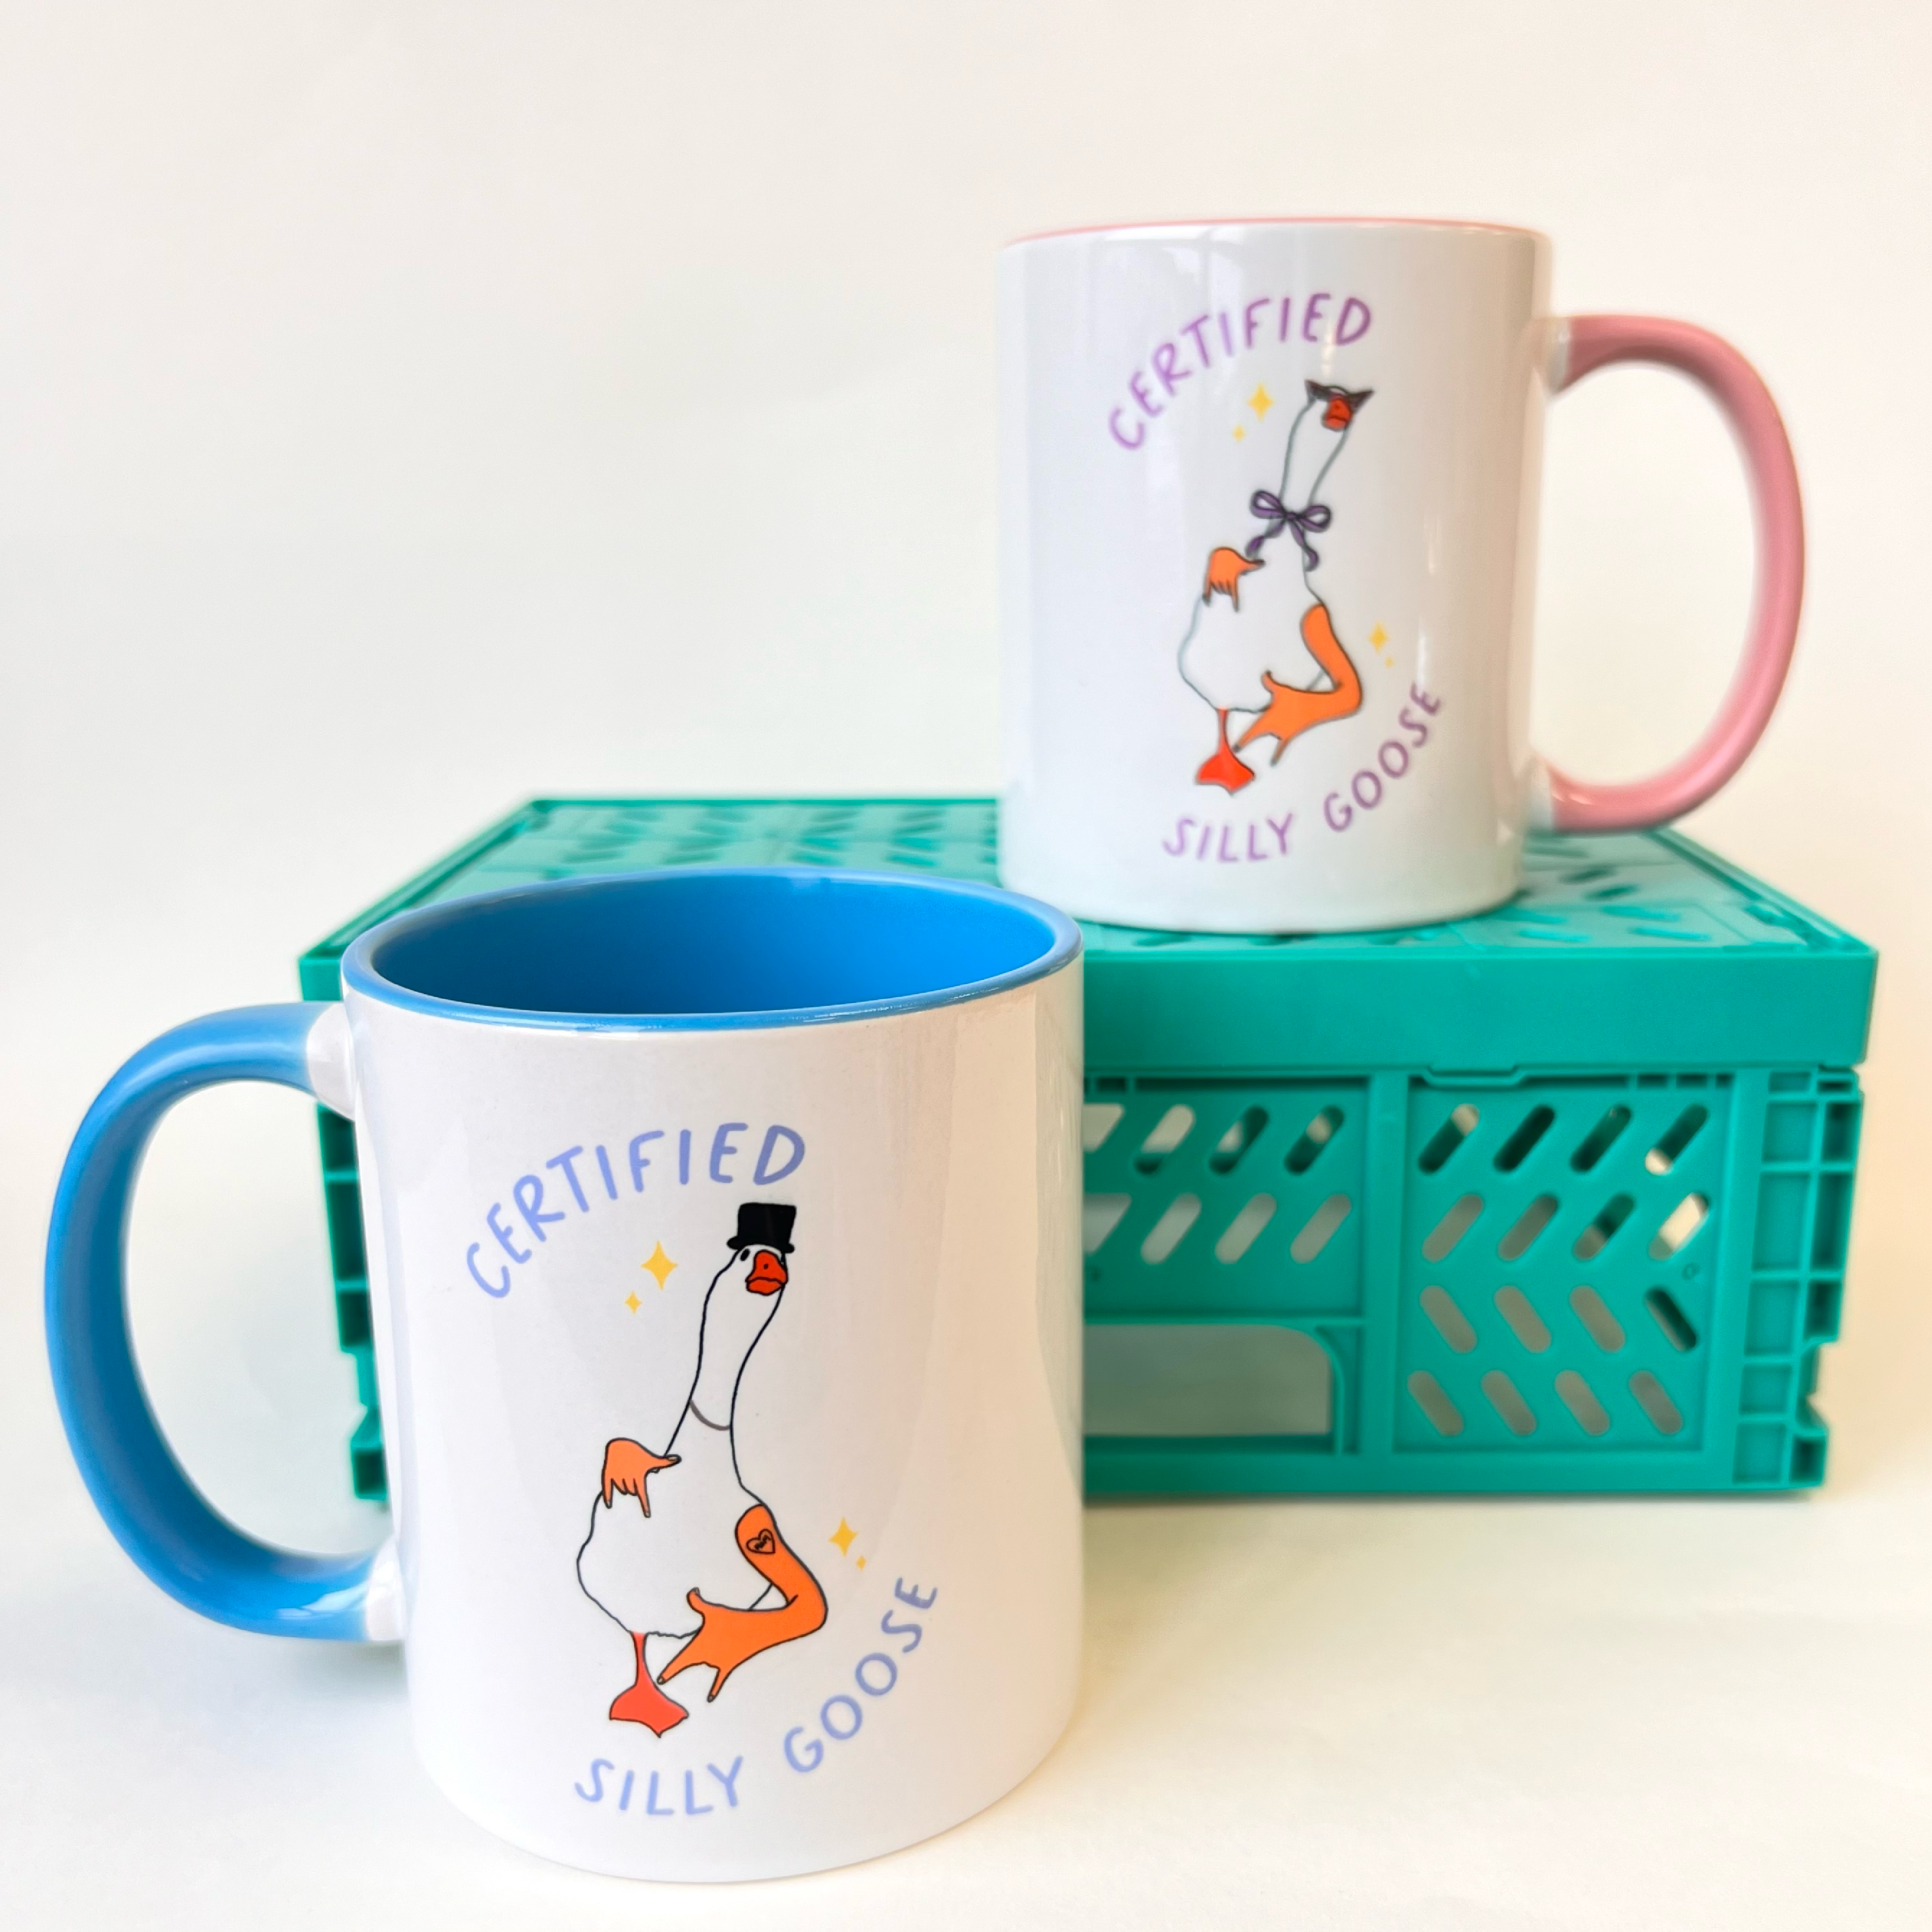 Silly goose mug set